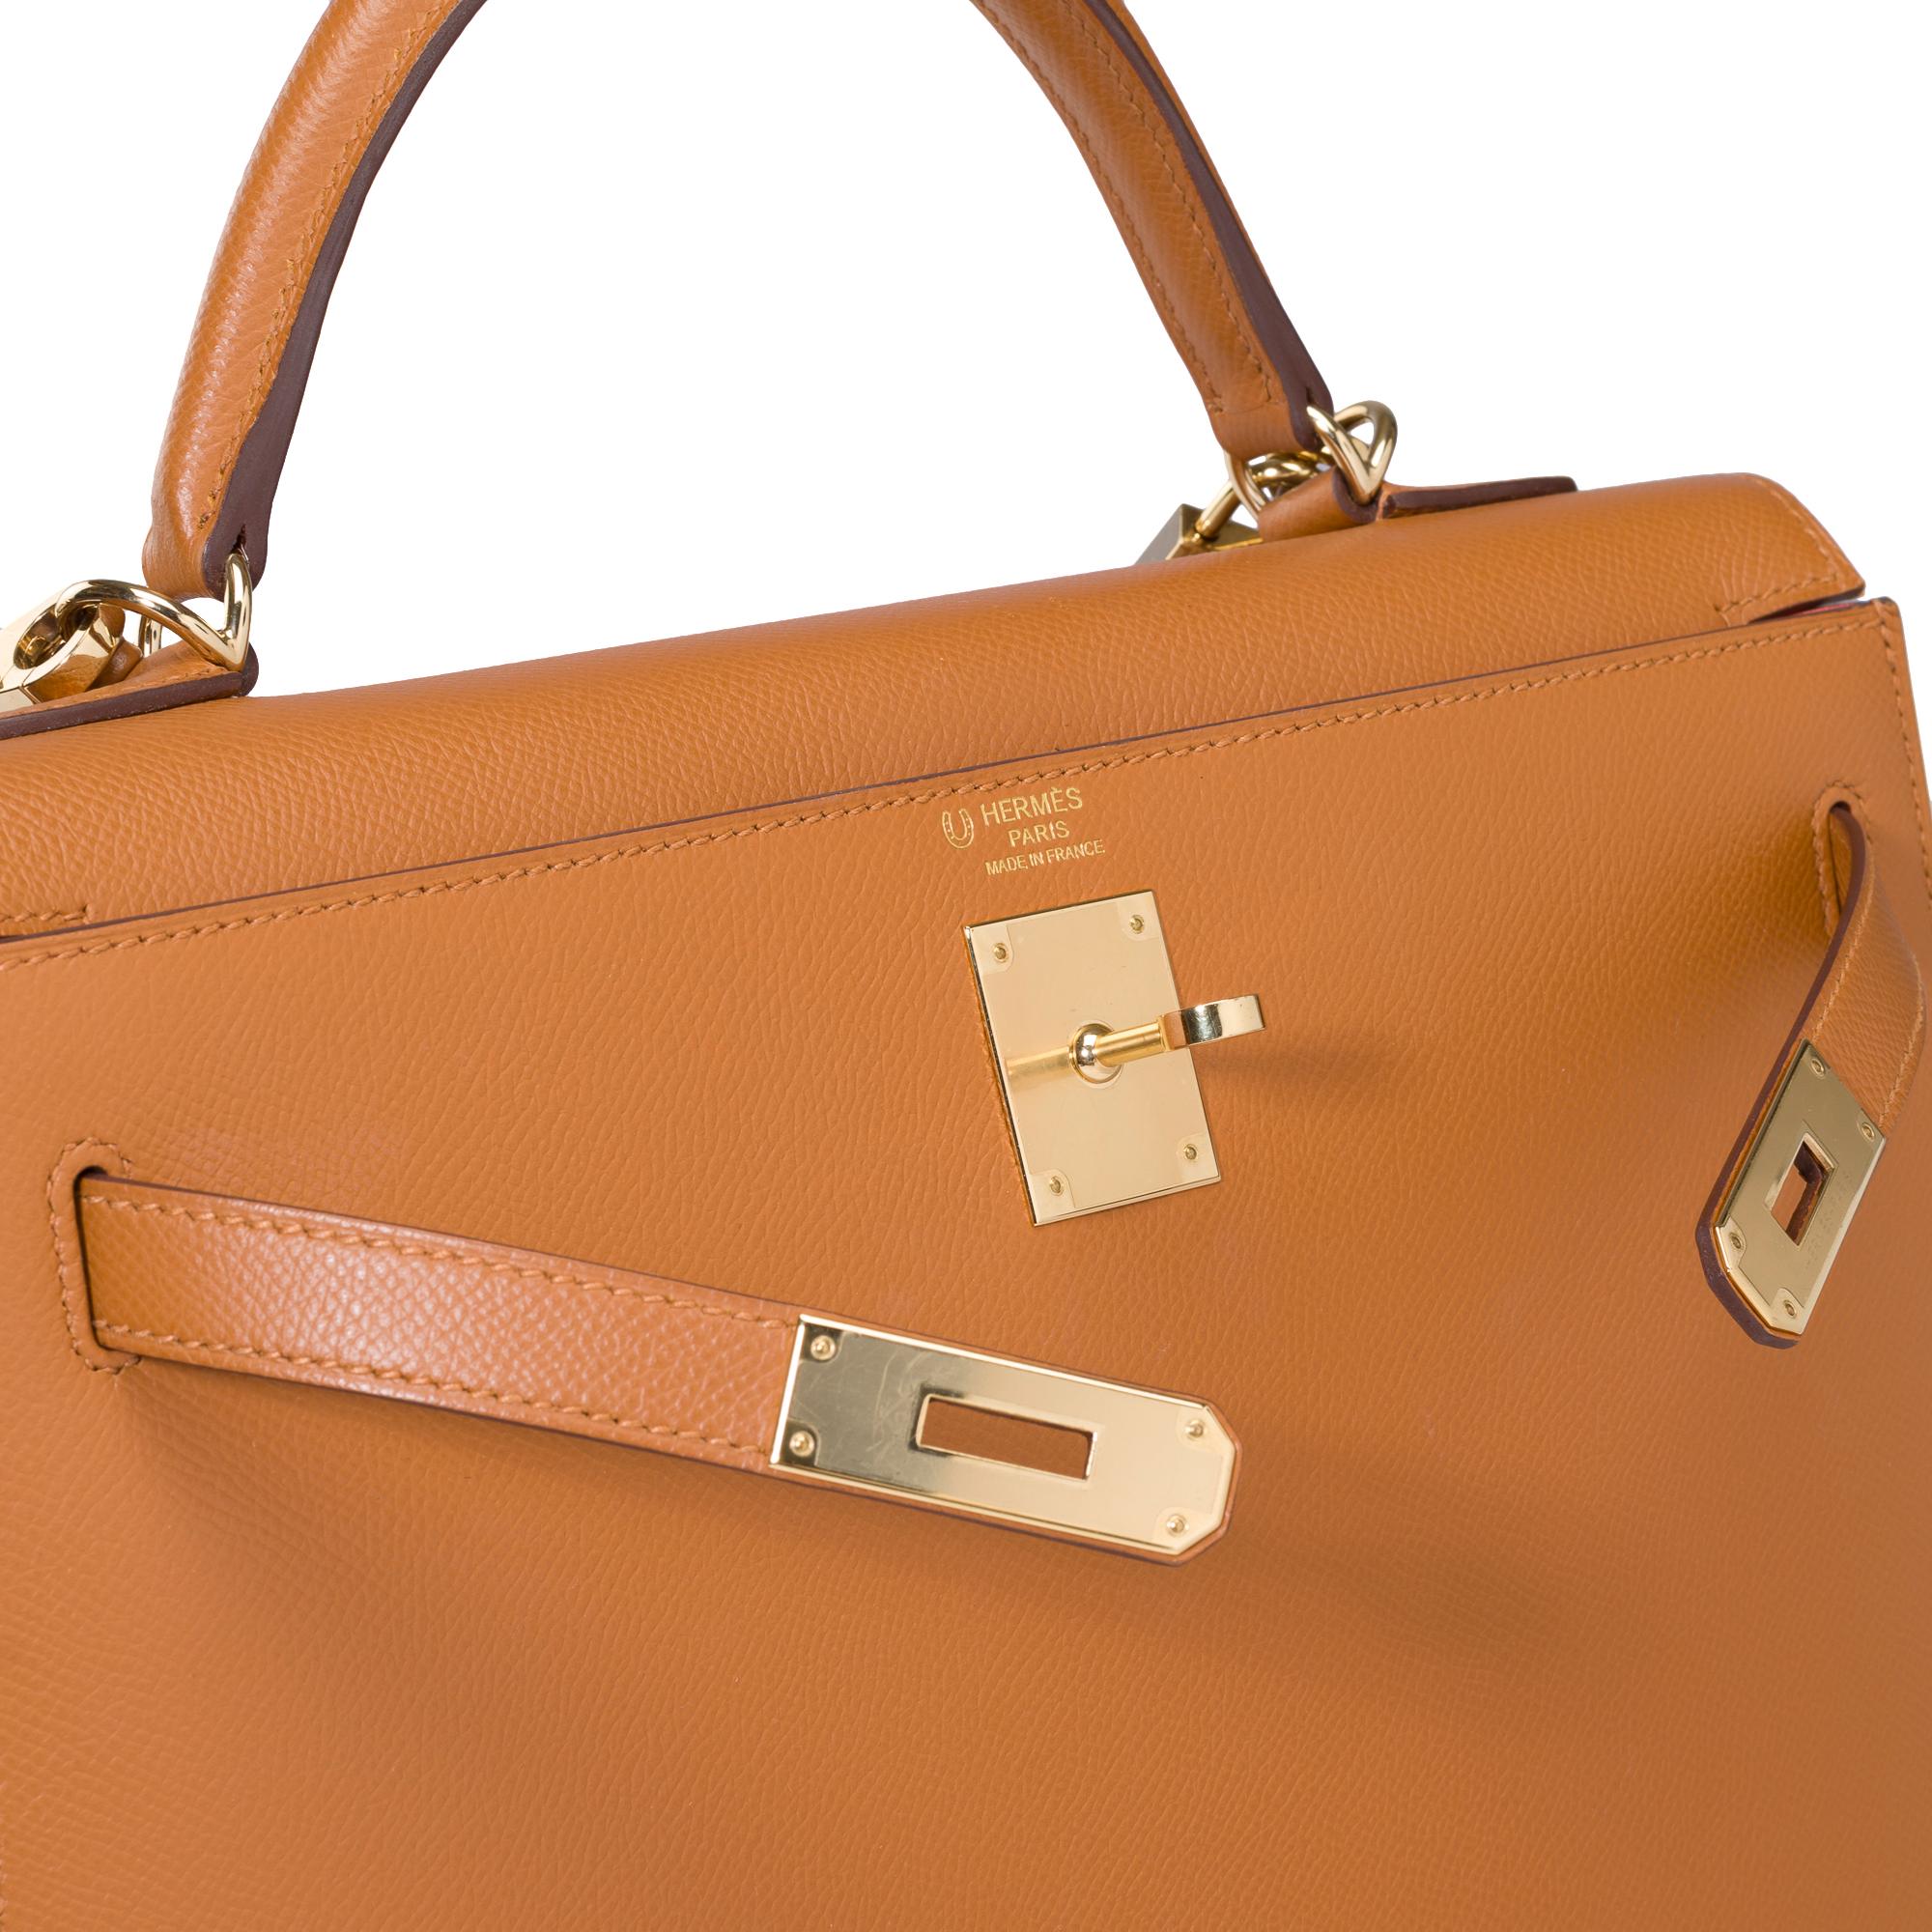 Hermès Kelly 32 sellier handbag strap (HSO) in Camel & Orange Epsom leather, GHW For Sale 3